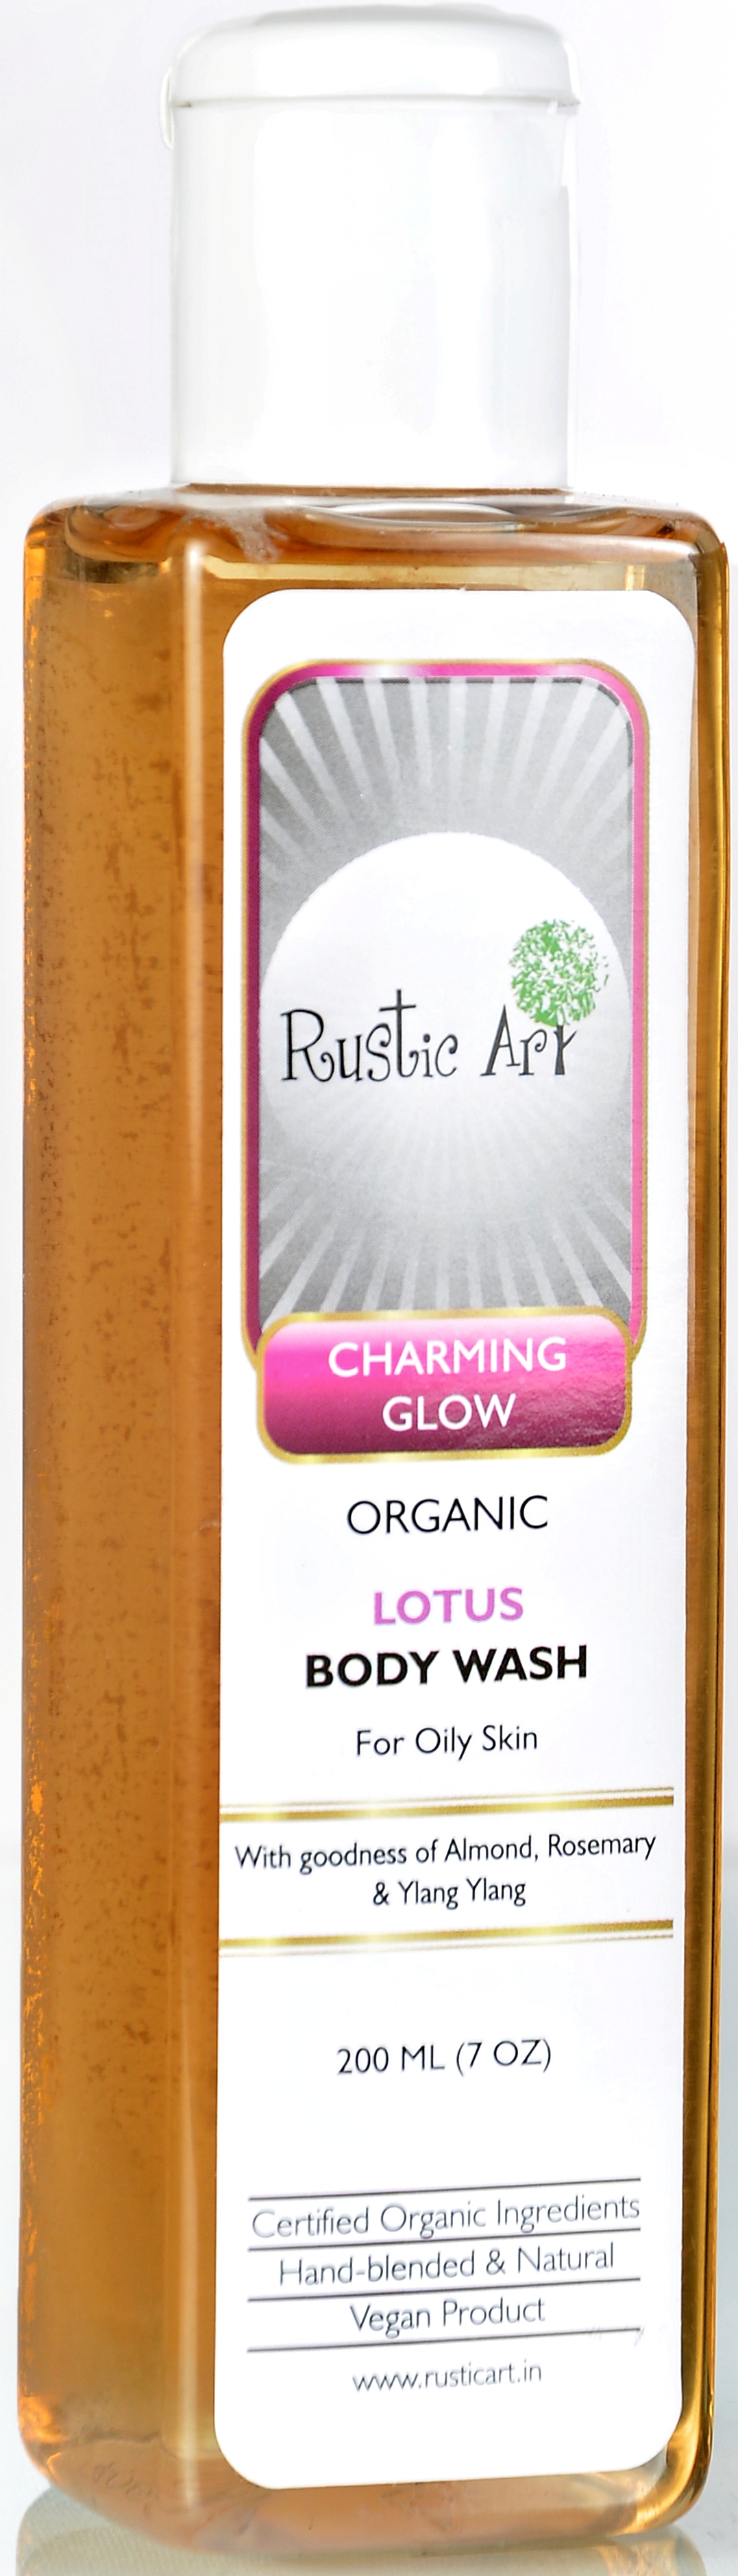 Rustic Art Organic Lotus Body Wash